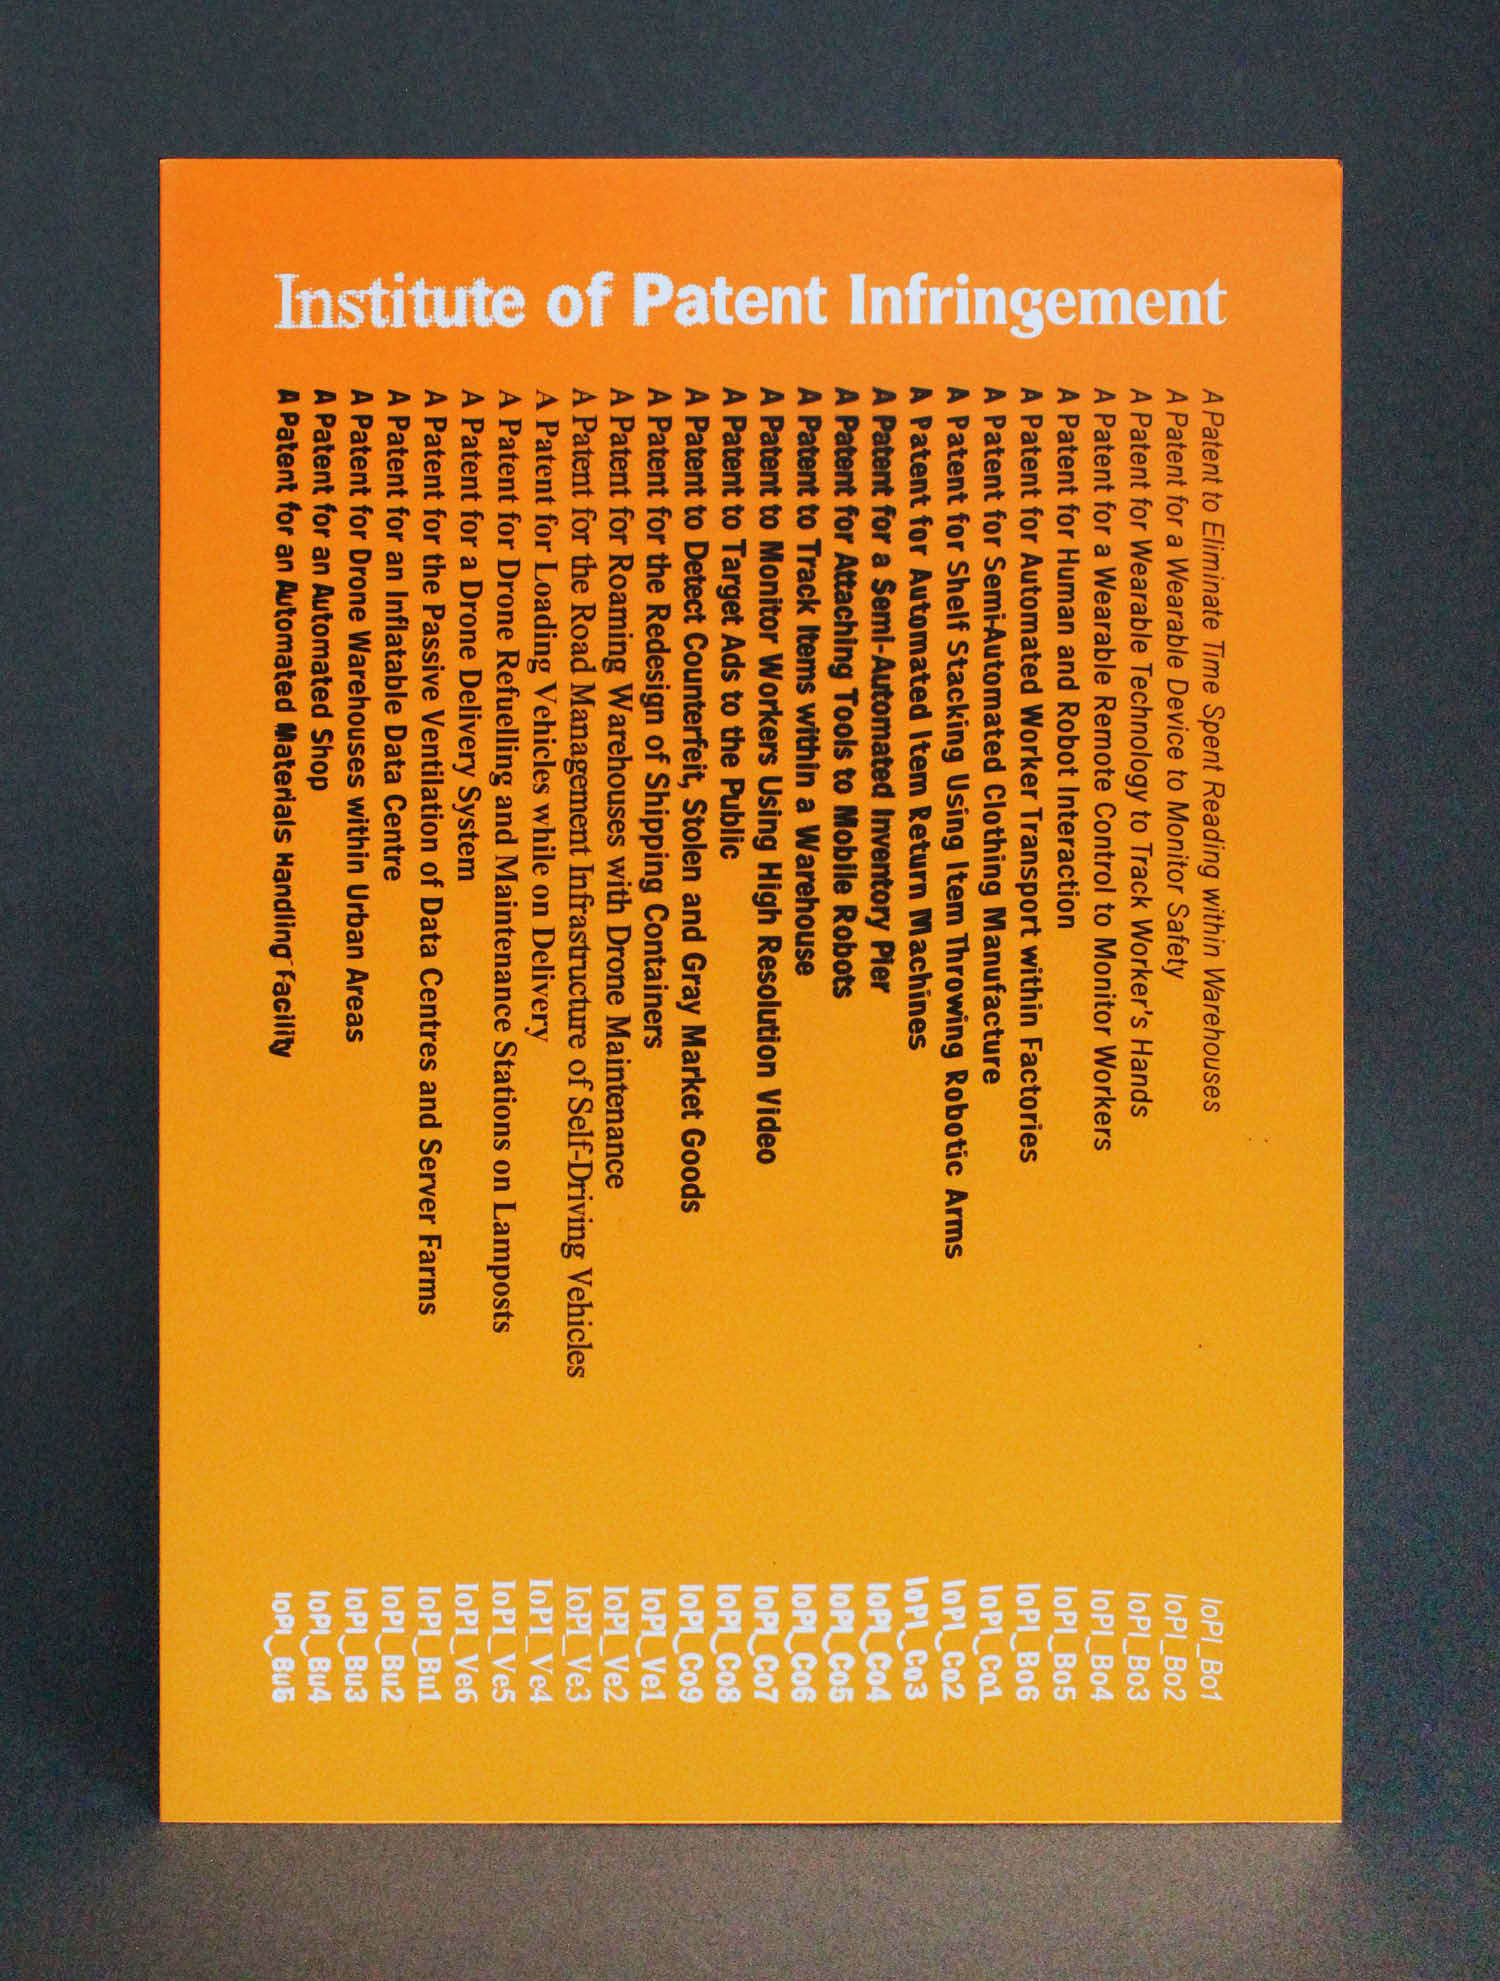 Matthew Stewart and Jane Chew, Institute of Patent Infringement at Victoria & Albert Museum, Het Nieuwe Instituut graphic identity and printed matter